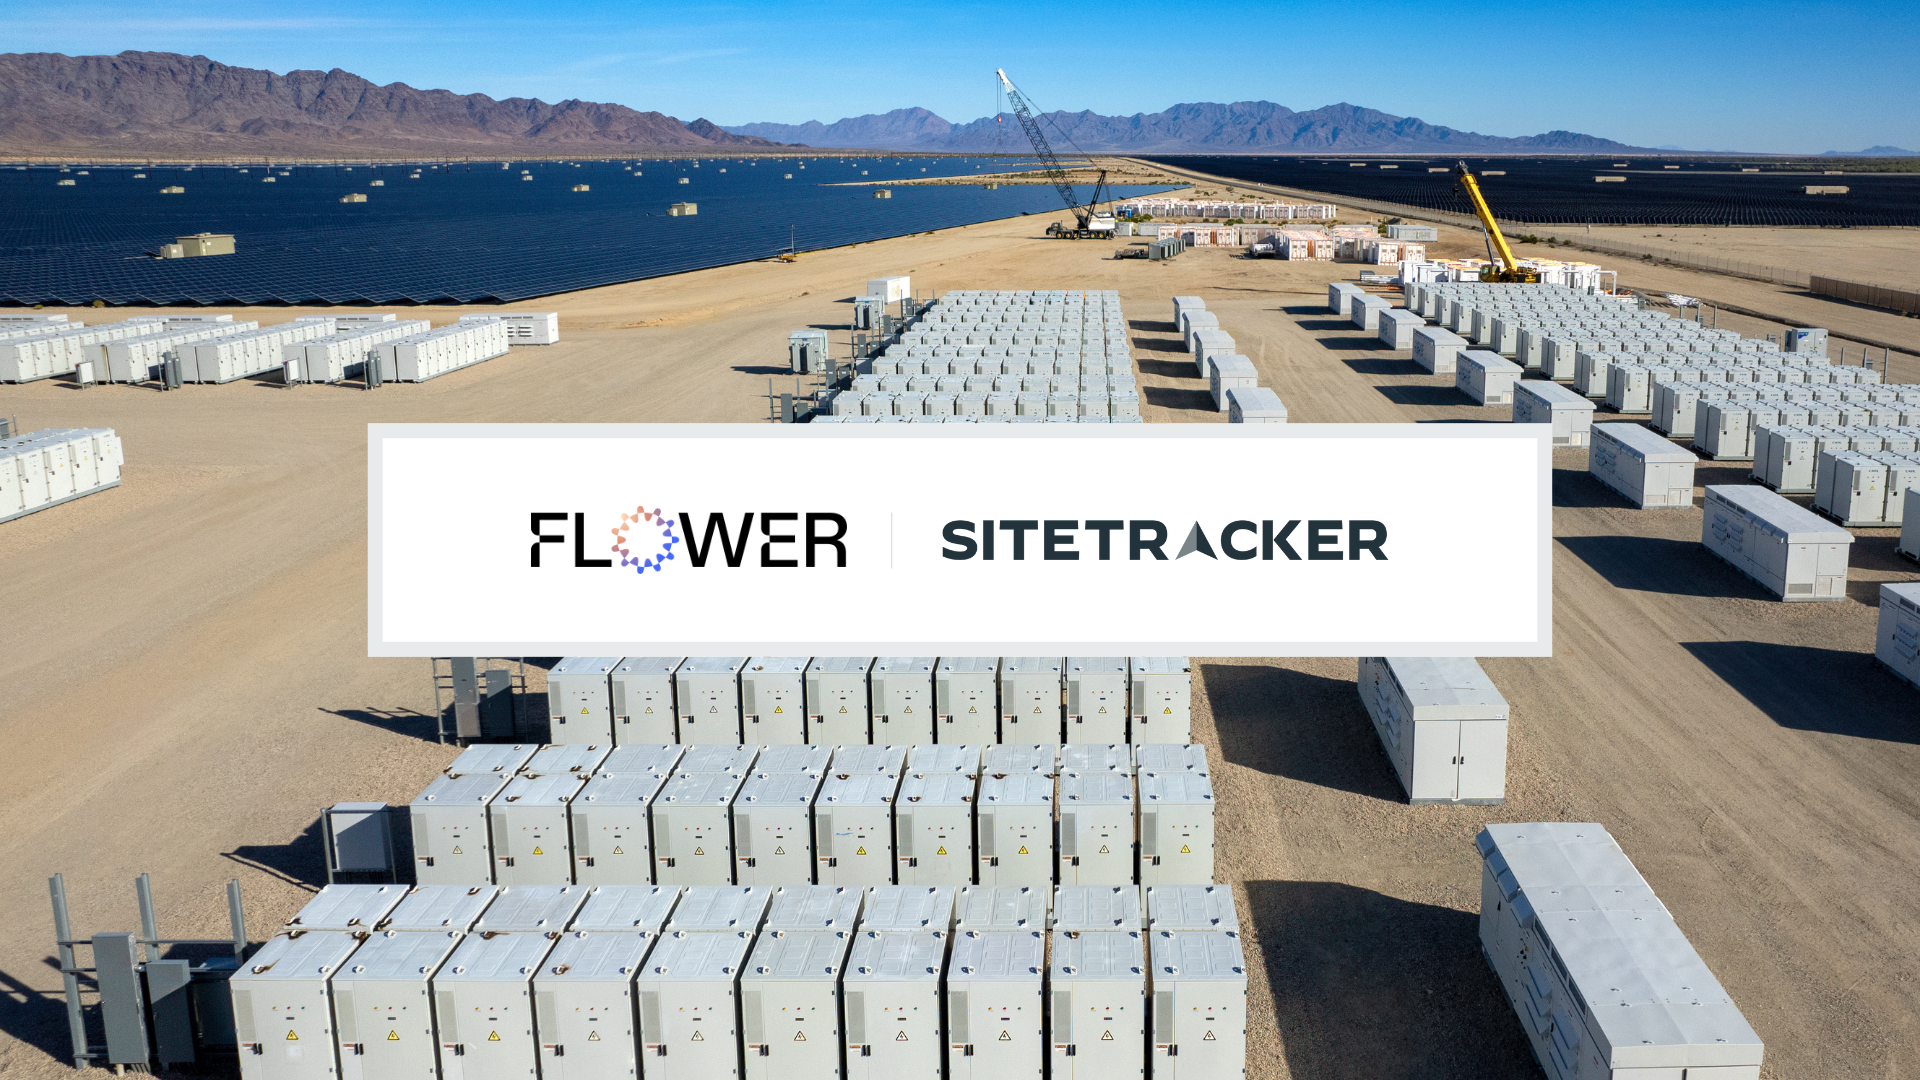 Flower + Sitetracker